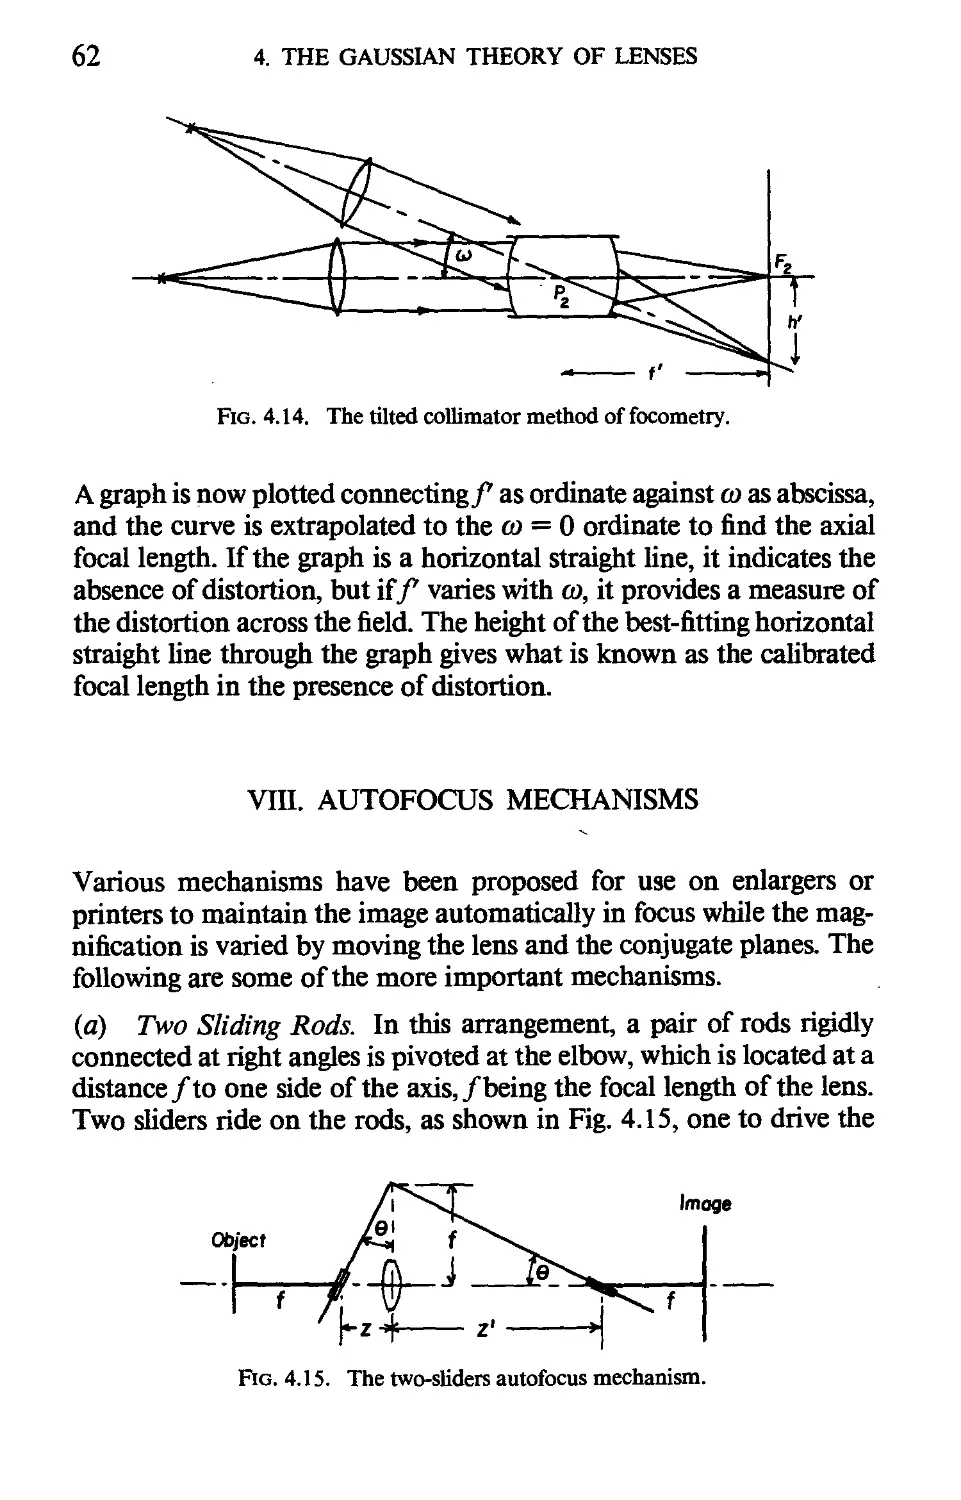 VIII. Autofocus Mechanisms